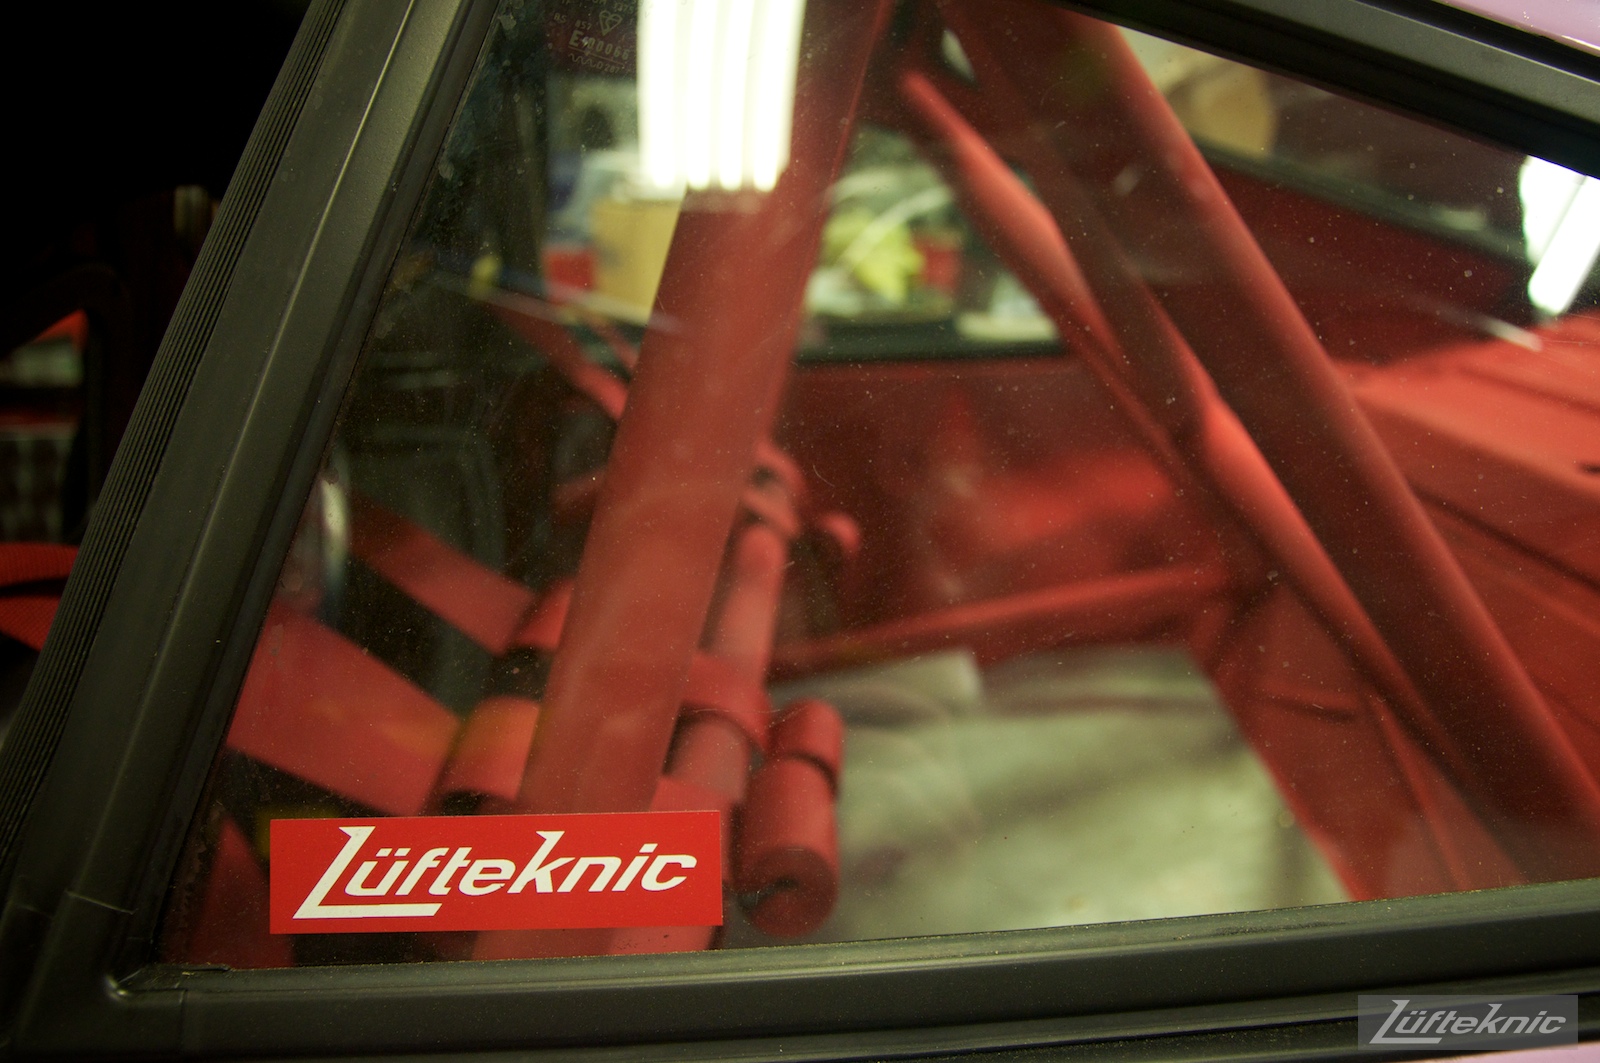 Roll cage details on the Lüfteknic #projectstuka Porsche 930 Turbo